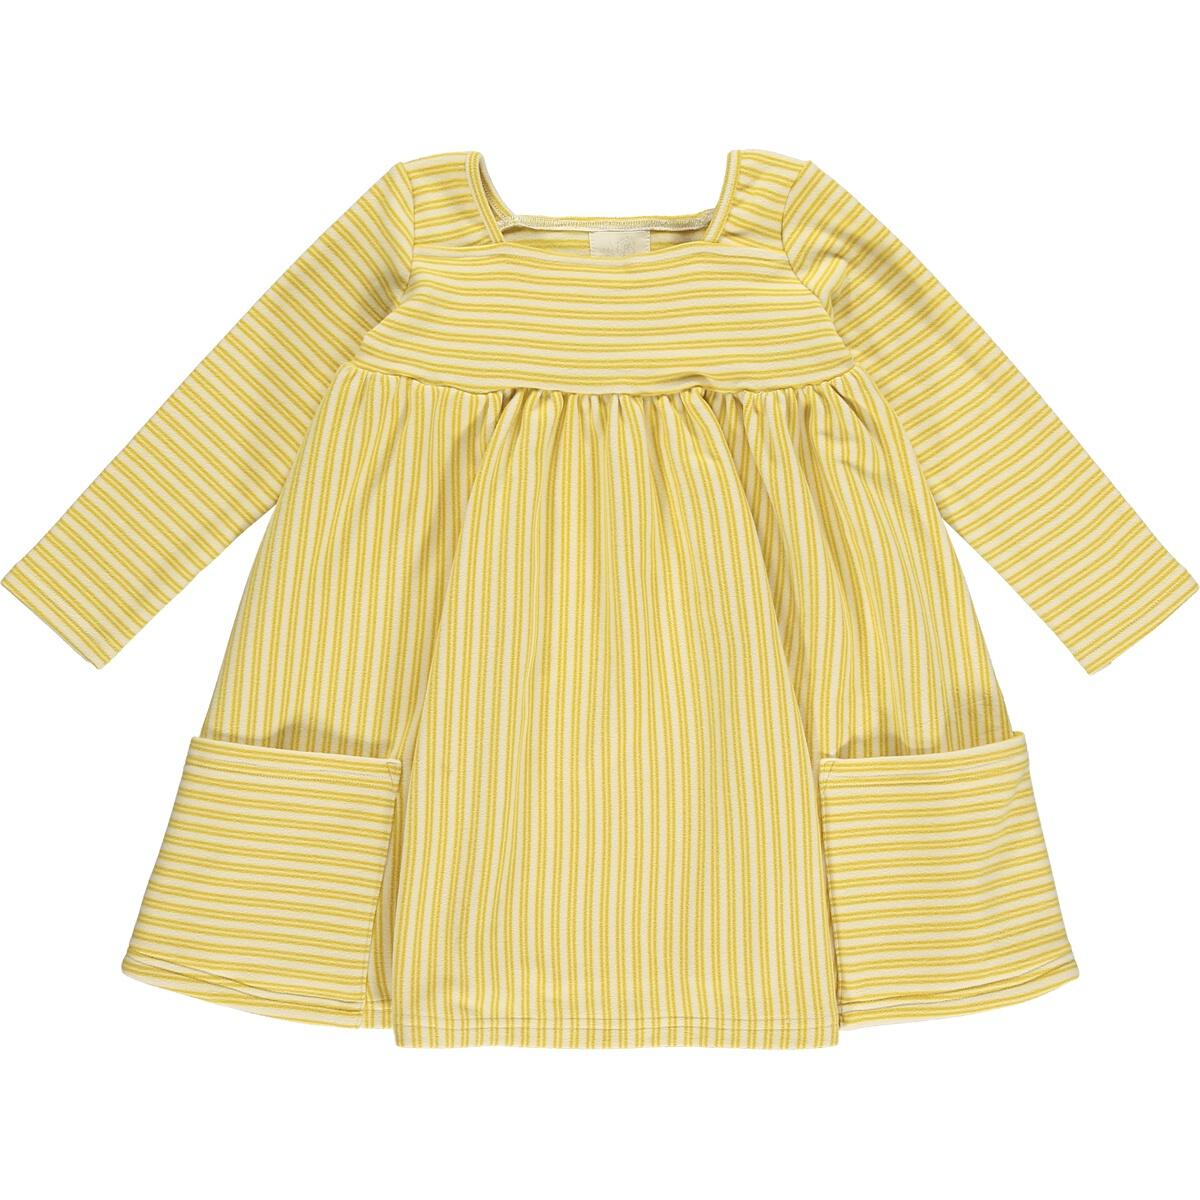 Vignette- Mustard Striped Long-sleeve Dress